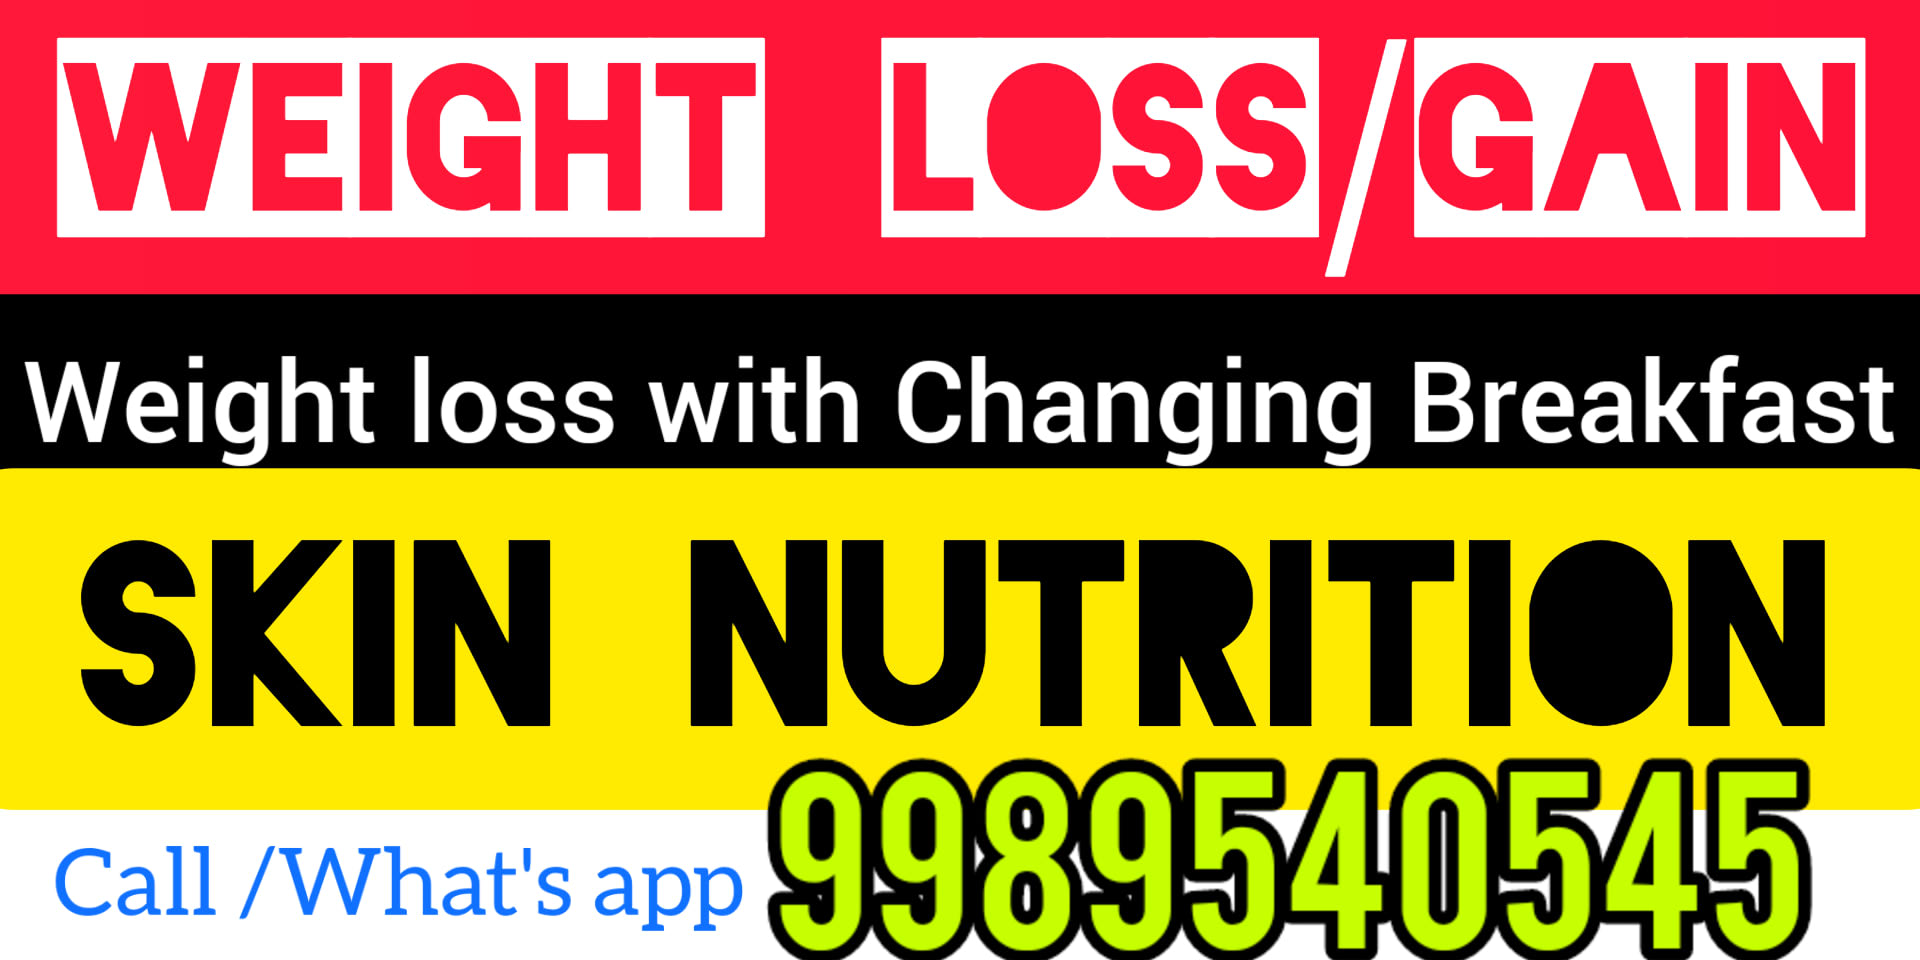 WEIGHT LOSS/GAIN NUTRITION CLUB